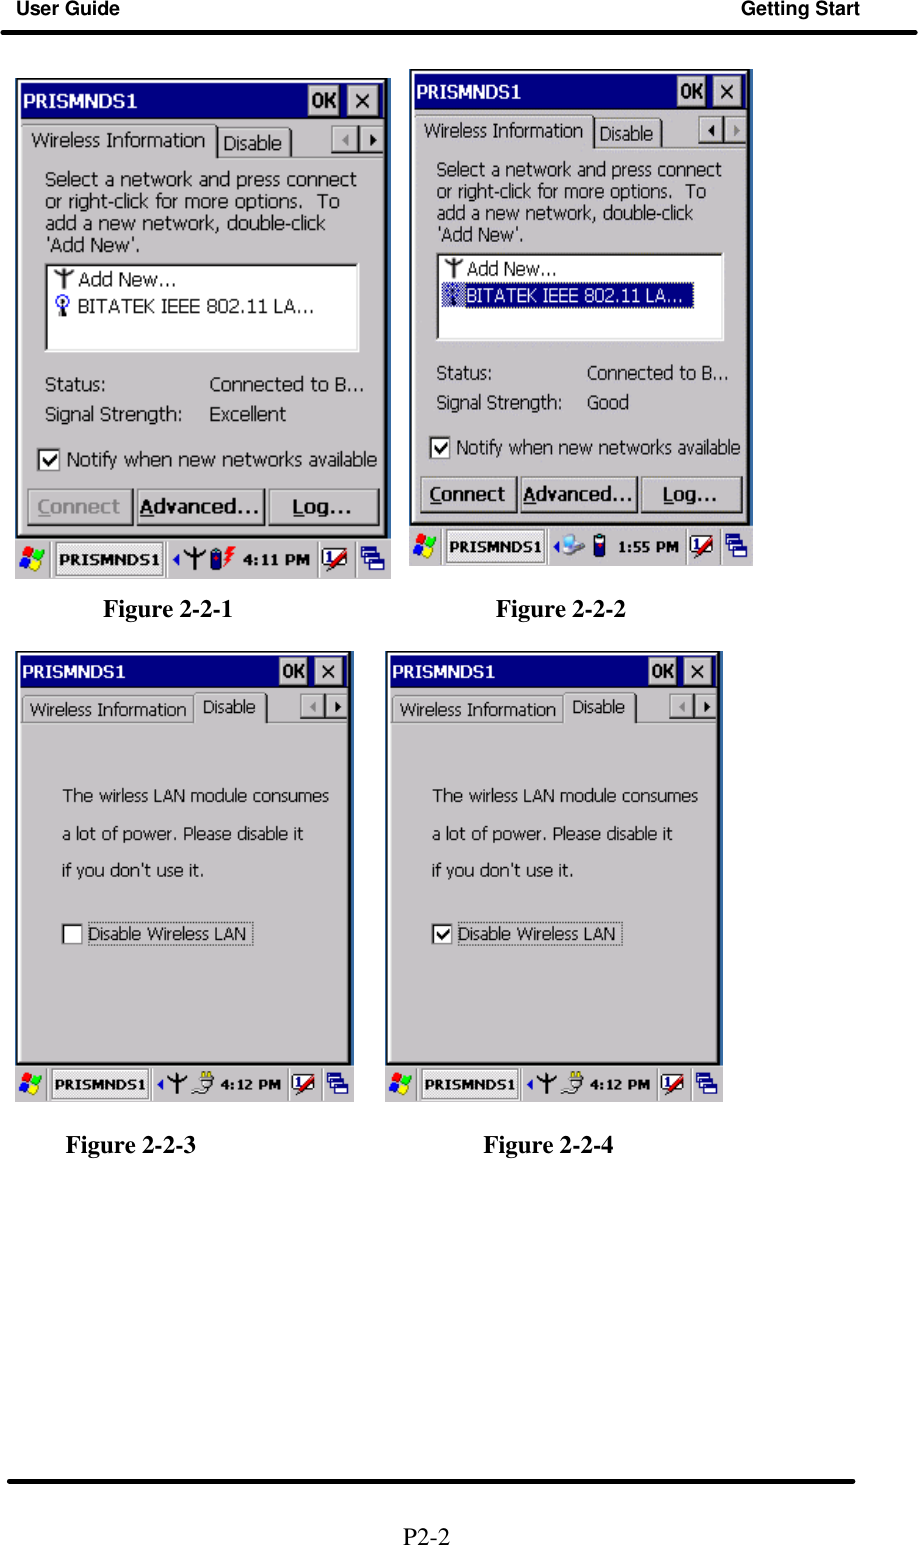 User Guide Getting Start                    Figure 2-2-1                     Figure 2-2-2             Figure 2-2-3                       Figure 2-2-4             P2-2  